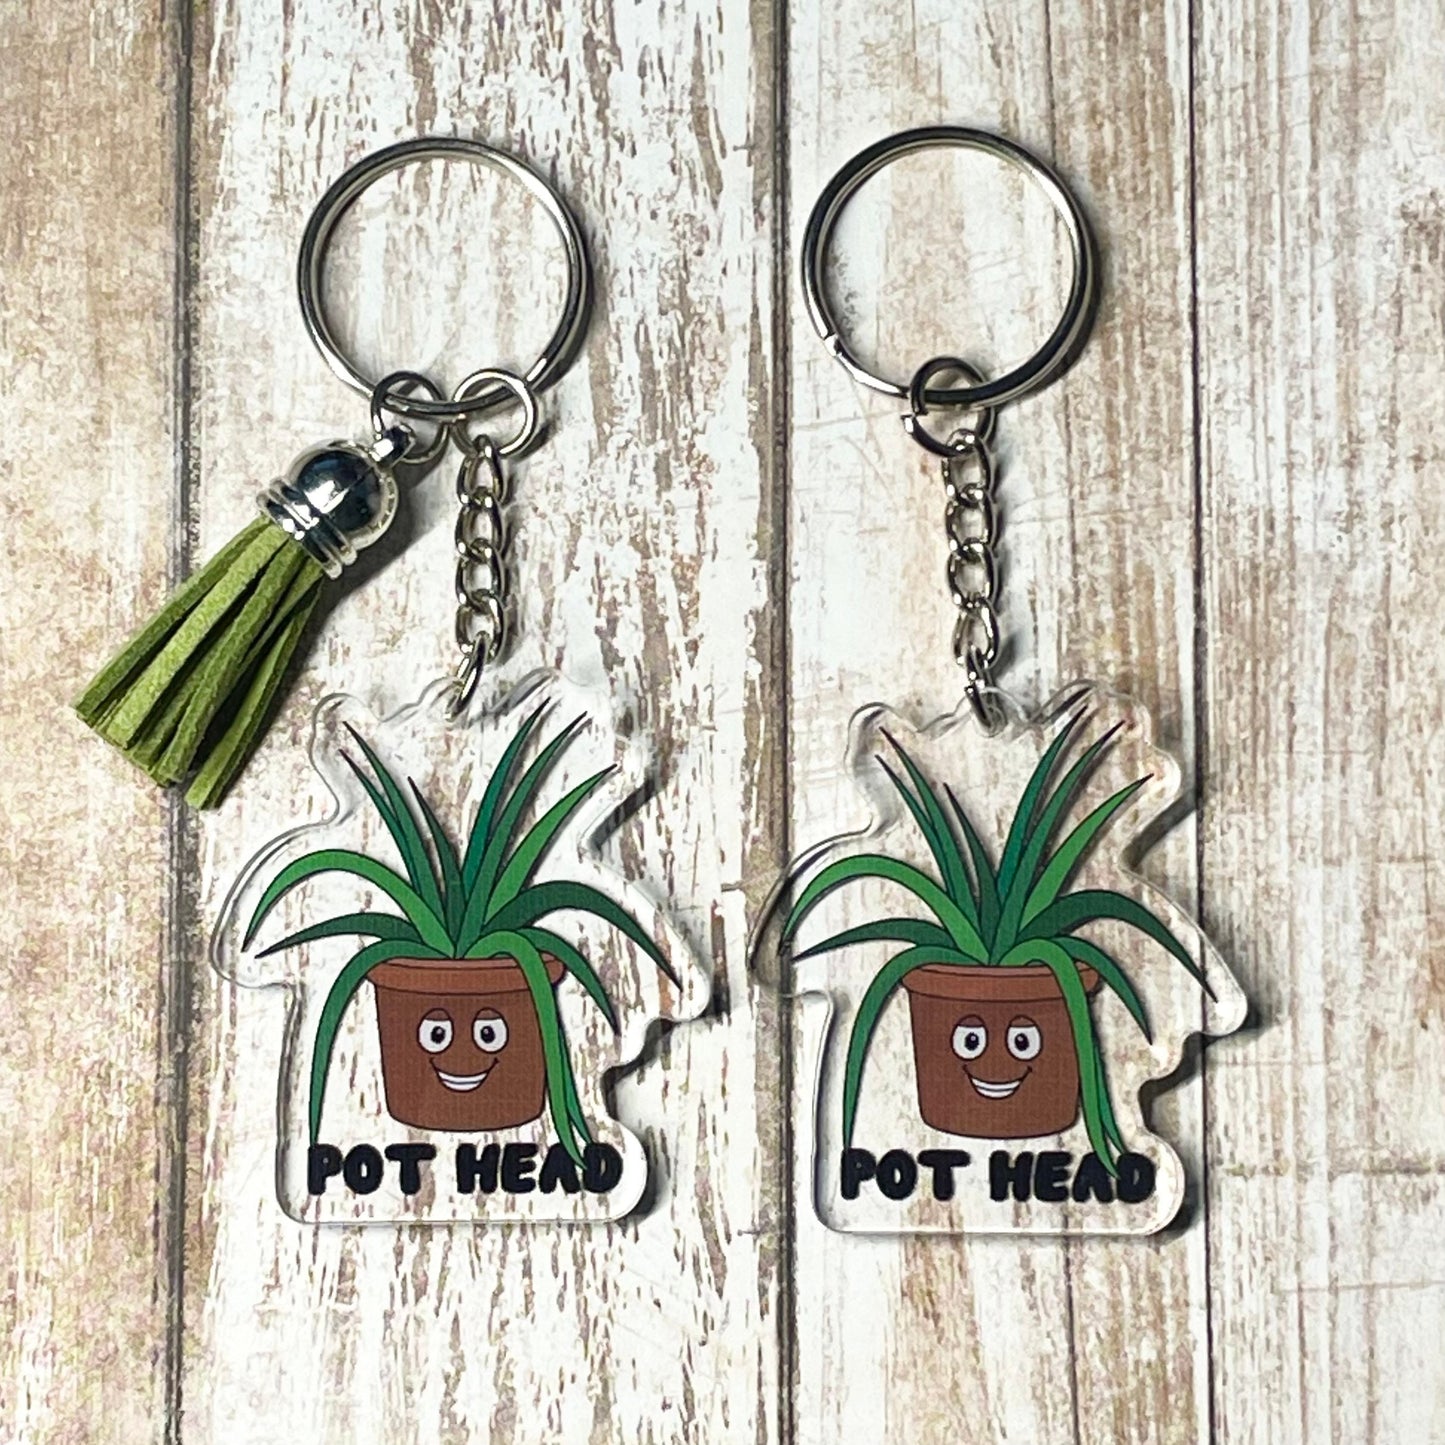 Plant Pot Head Keychain